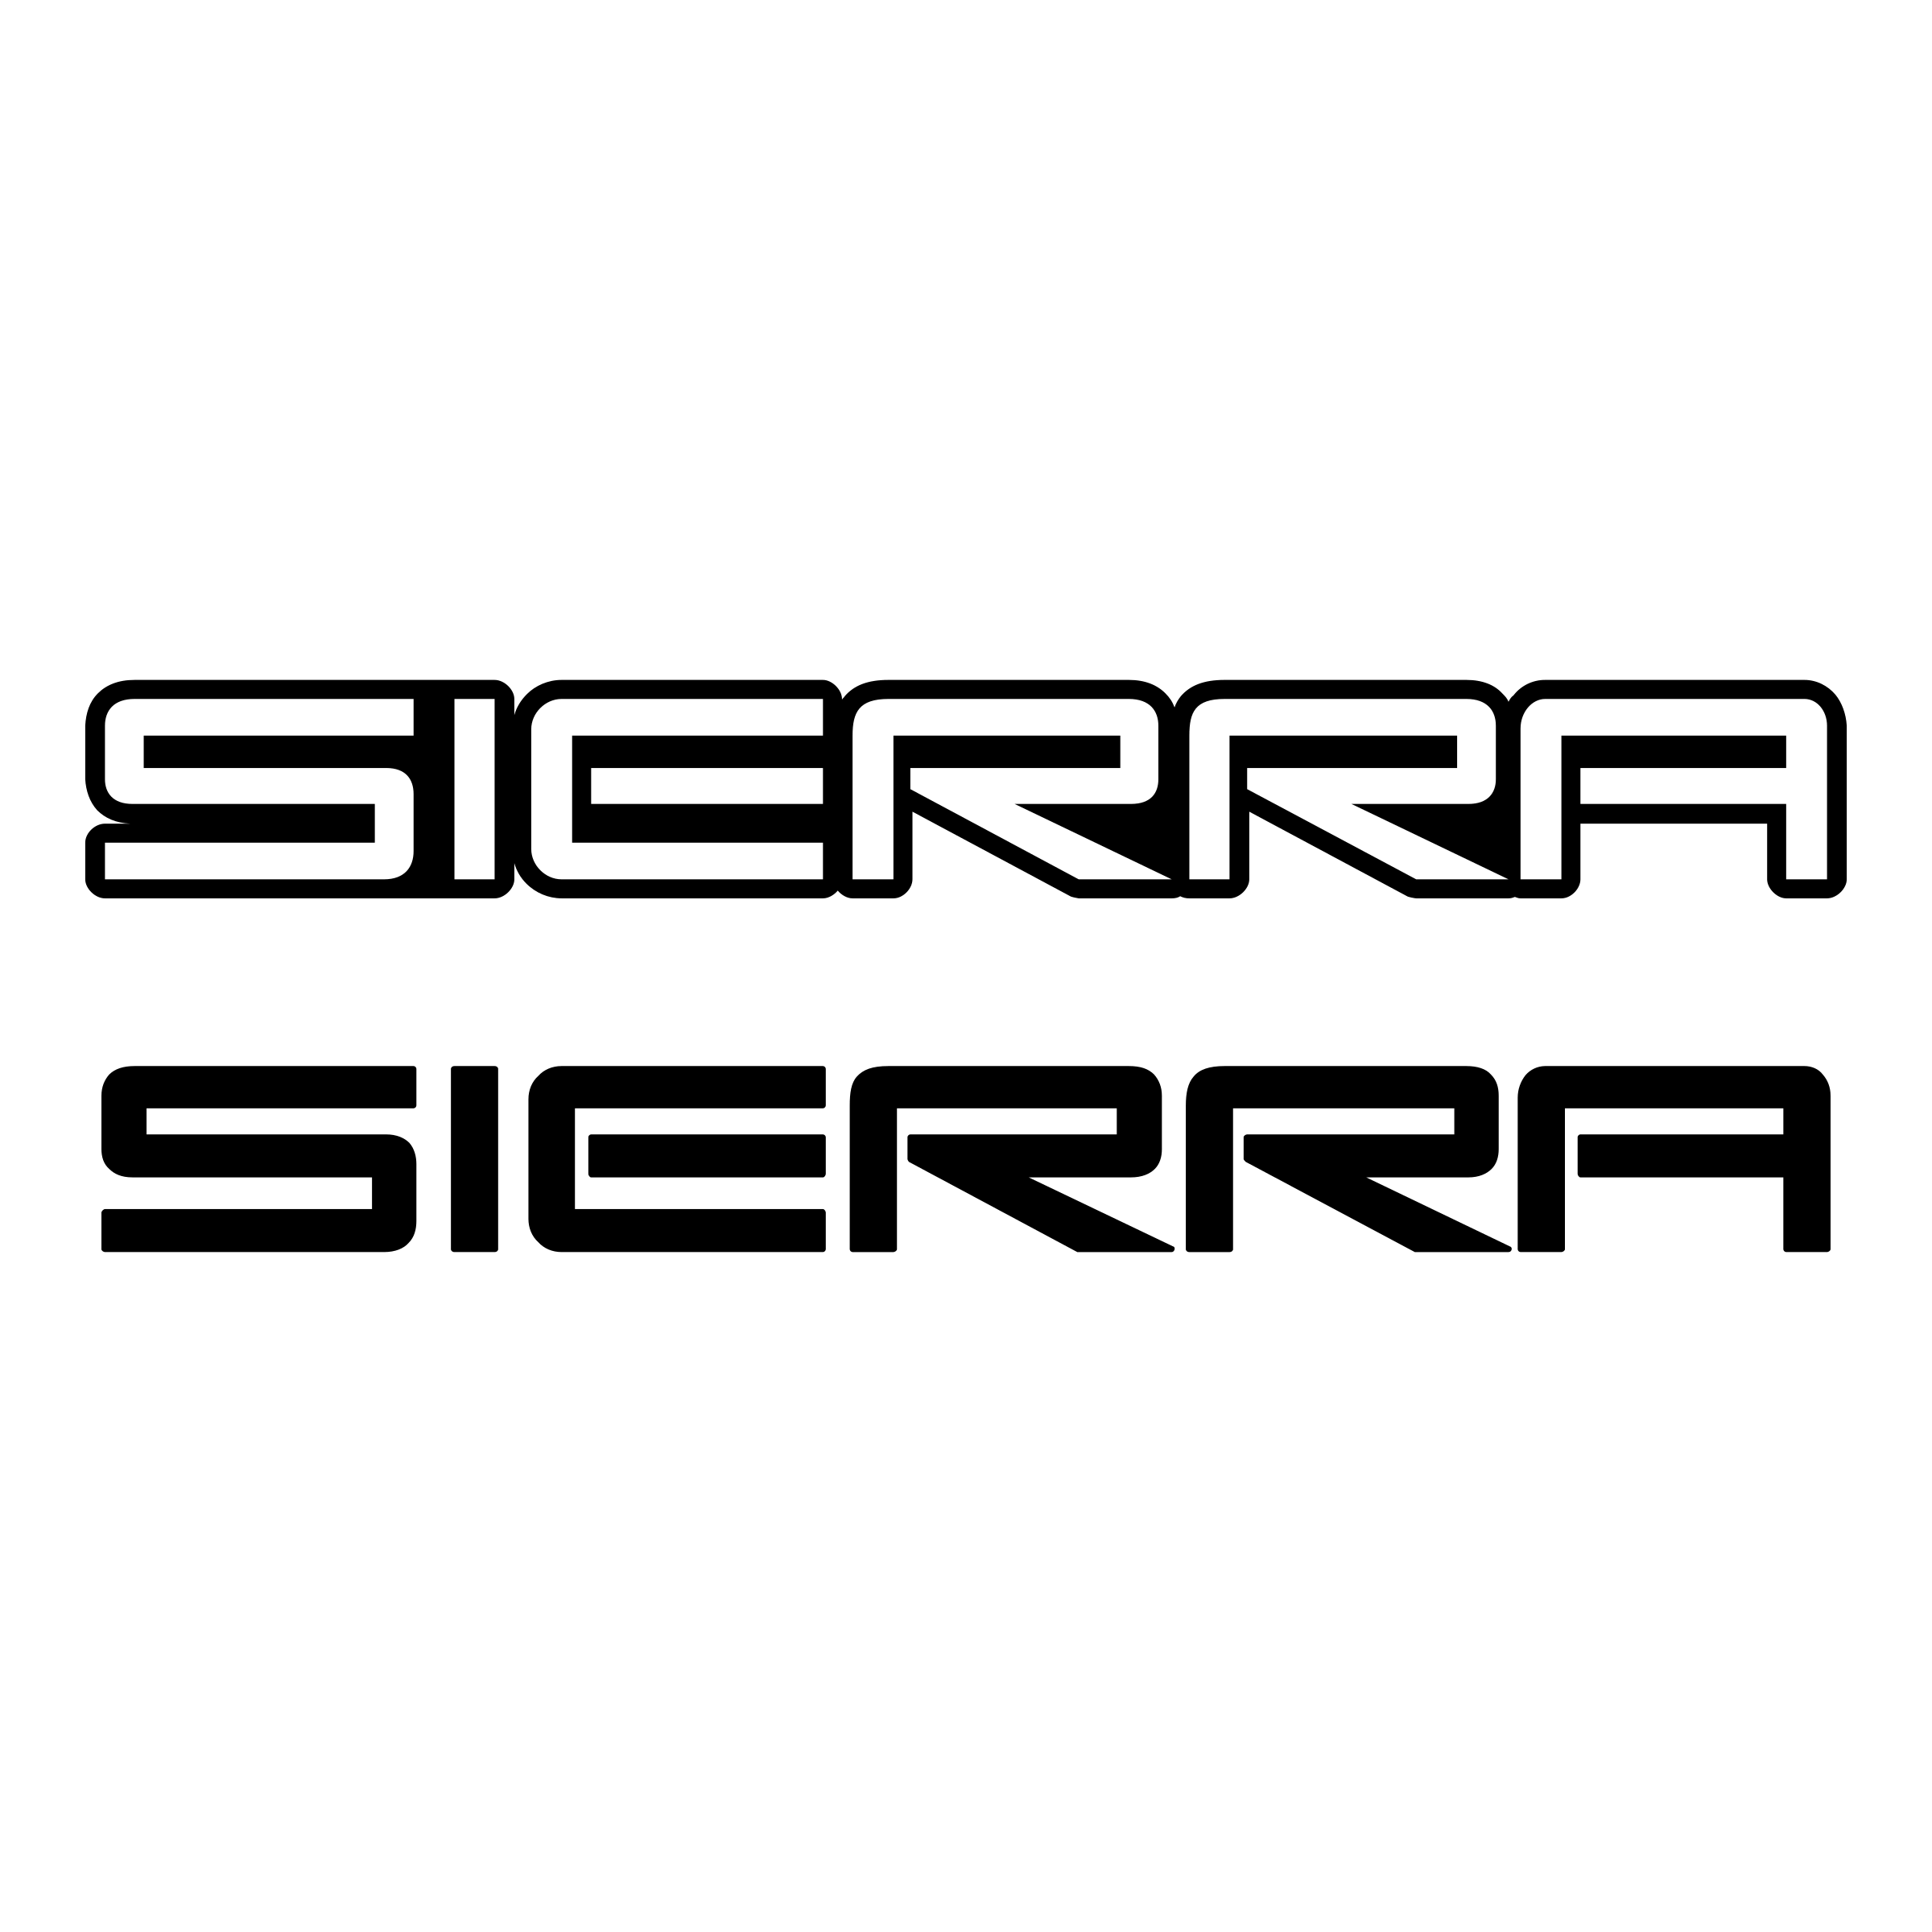 Sierra Logo - Sierra Logo PNG Transparent & SVG Vector - Freebie Supply